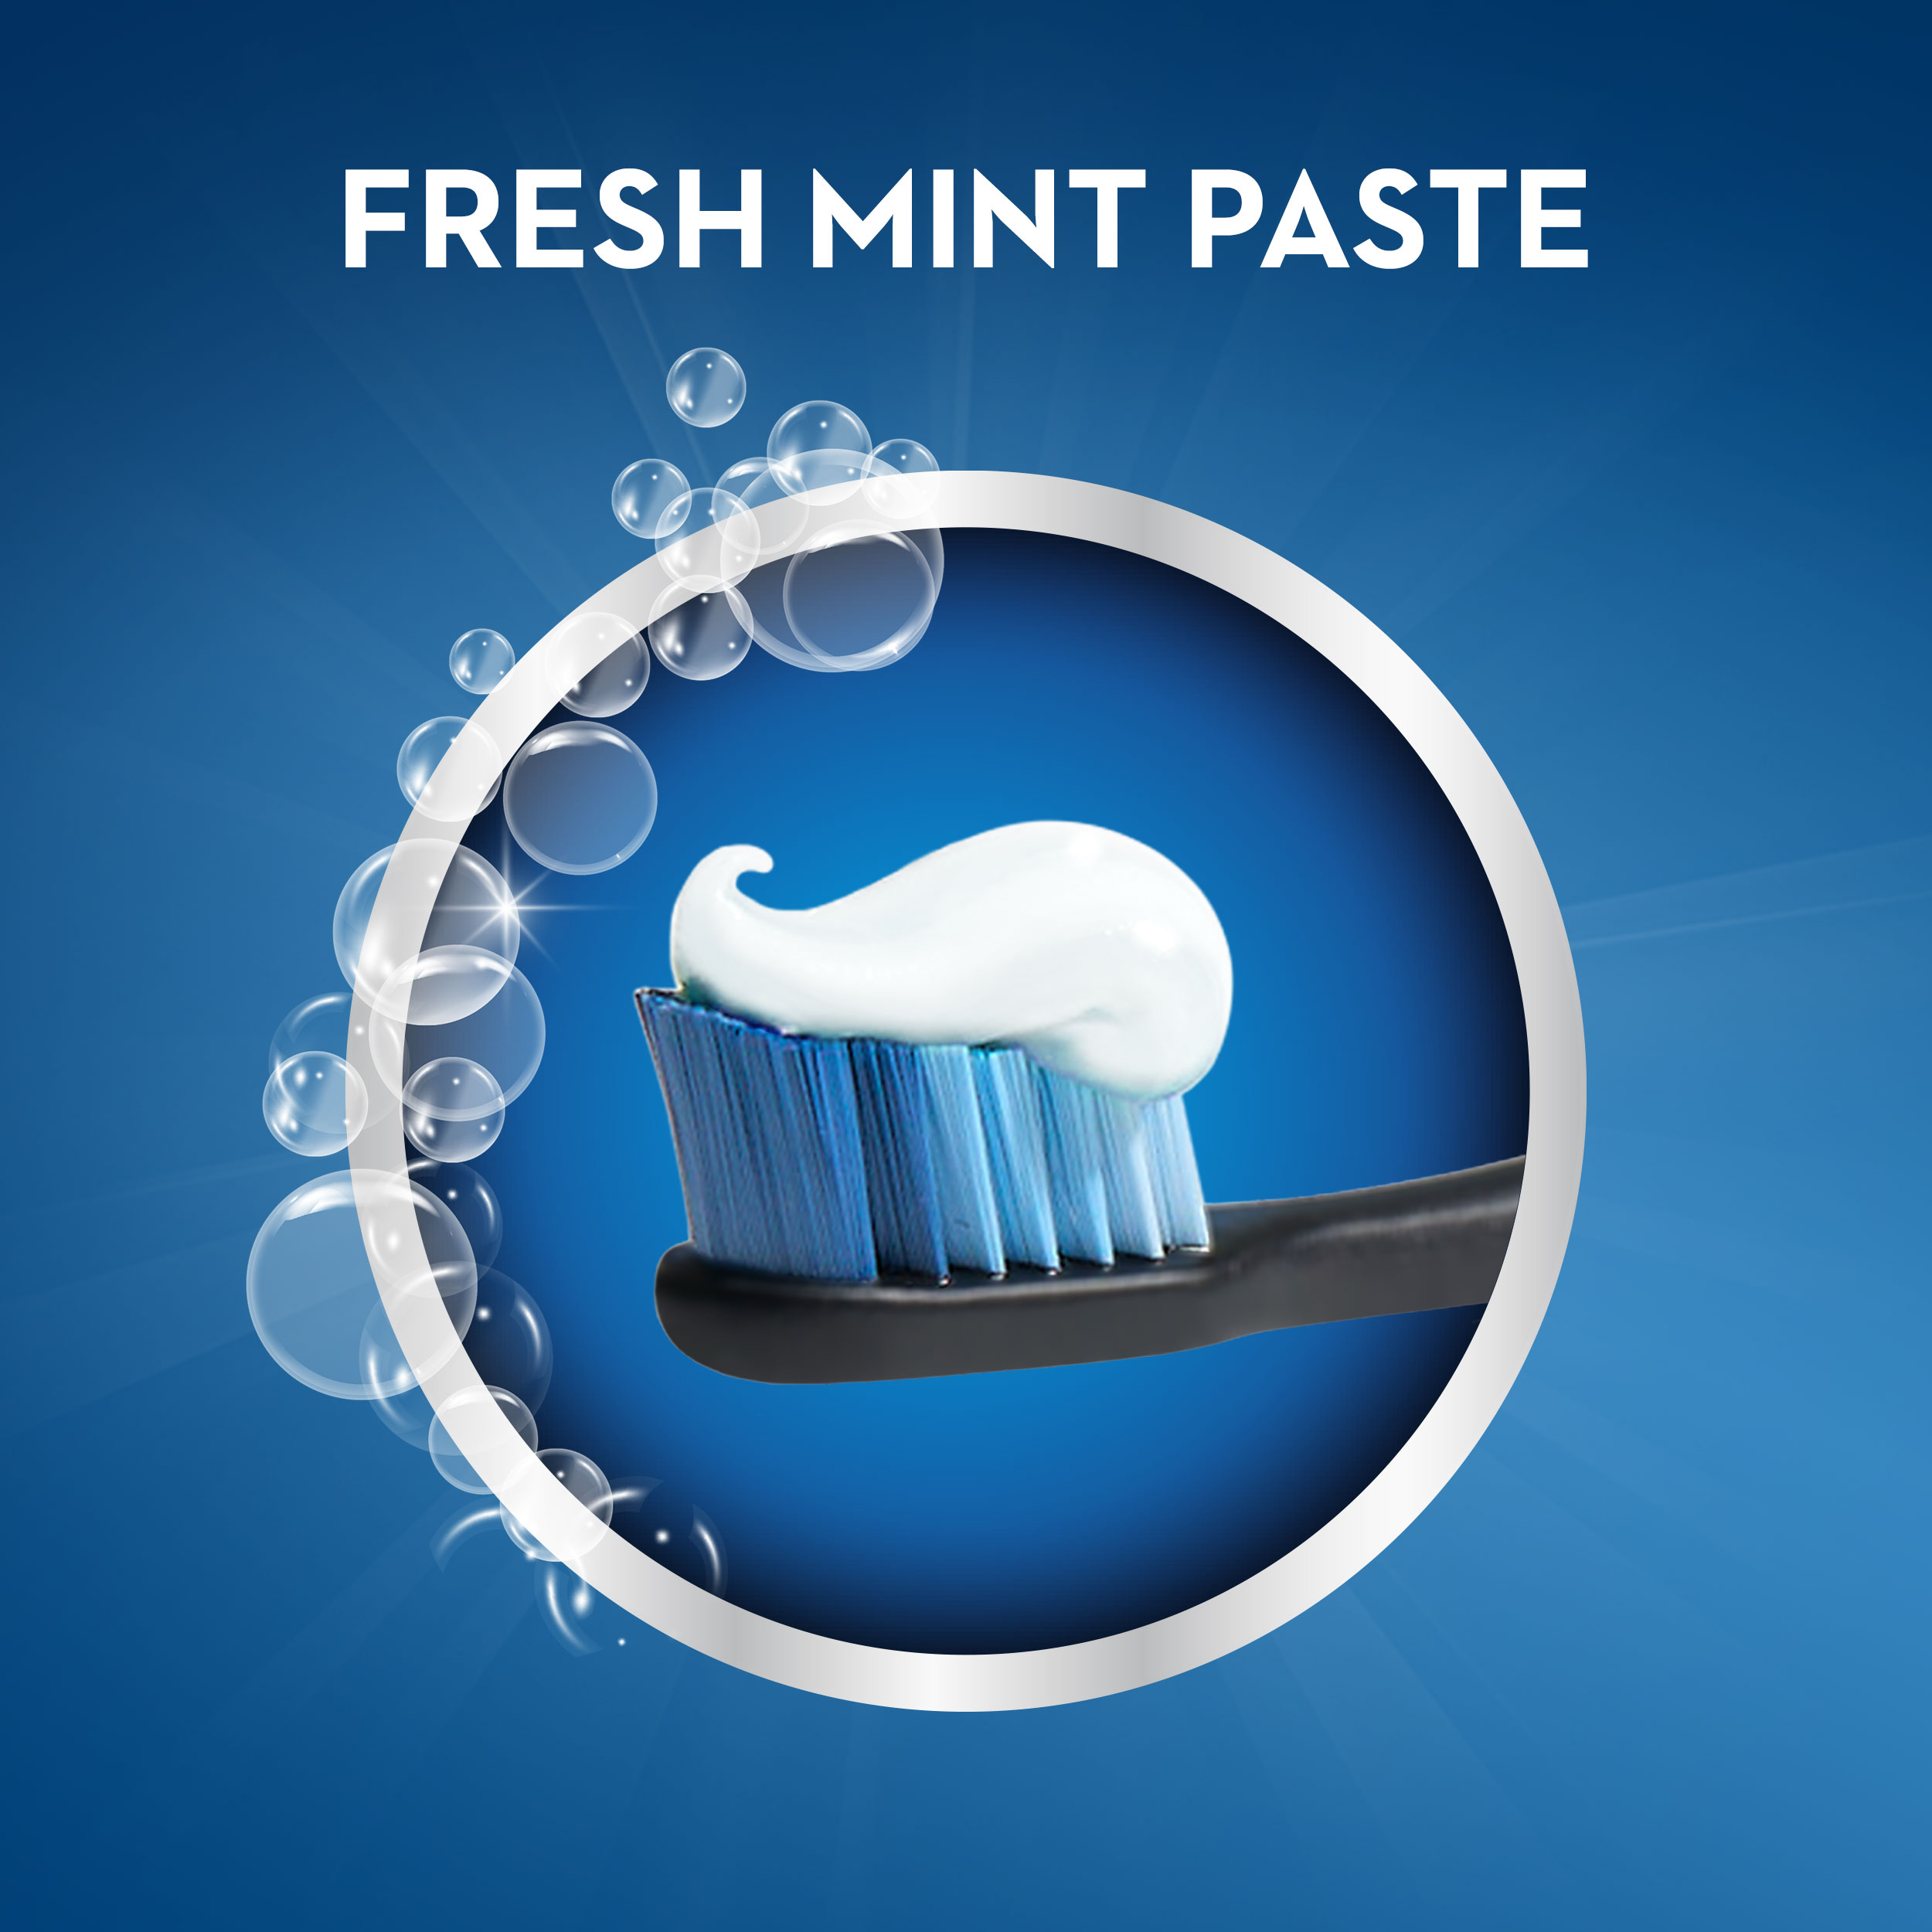 Crest Plus Baking Soda & Peroxide Whitening Toothpaste, Fresh Mint, 5.7 oz, Pack of 3 - image 2 of 6